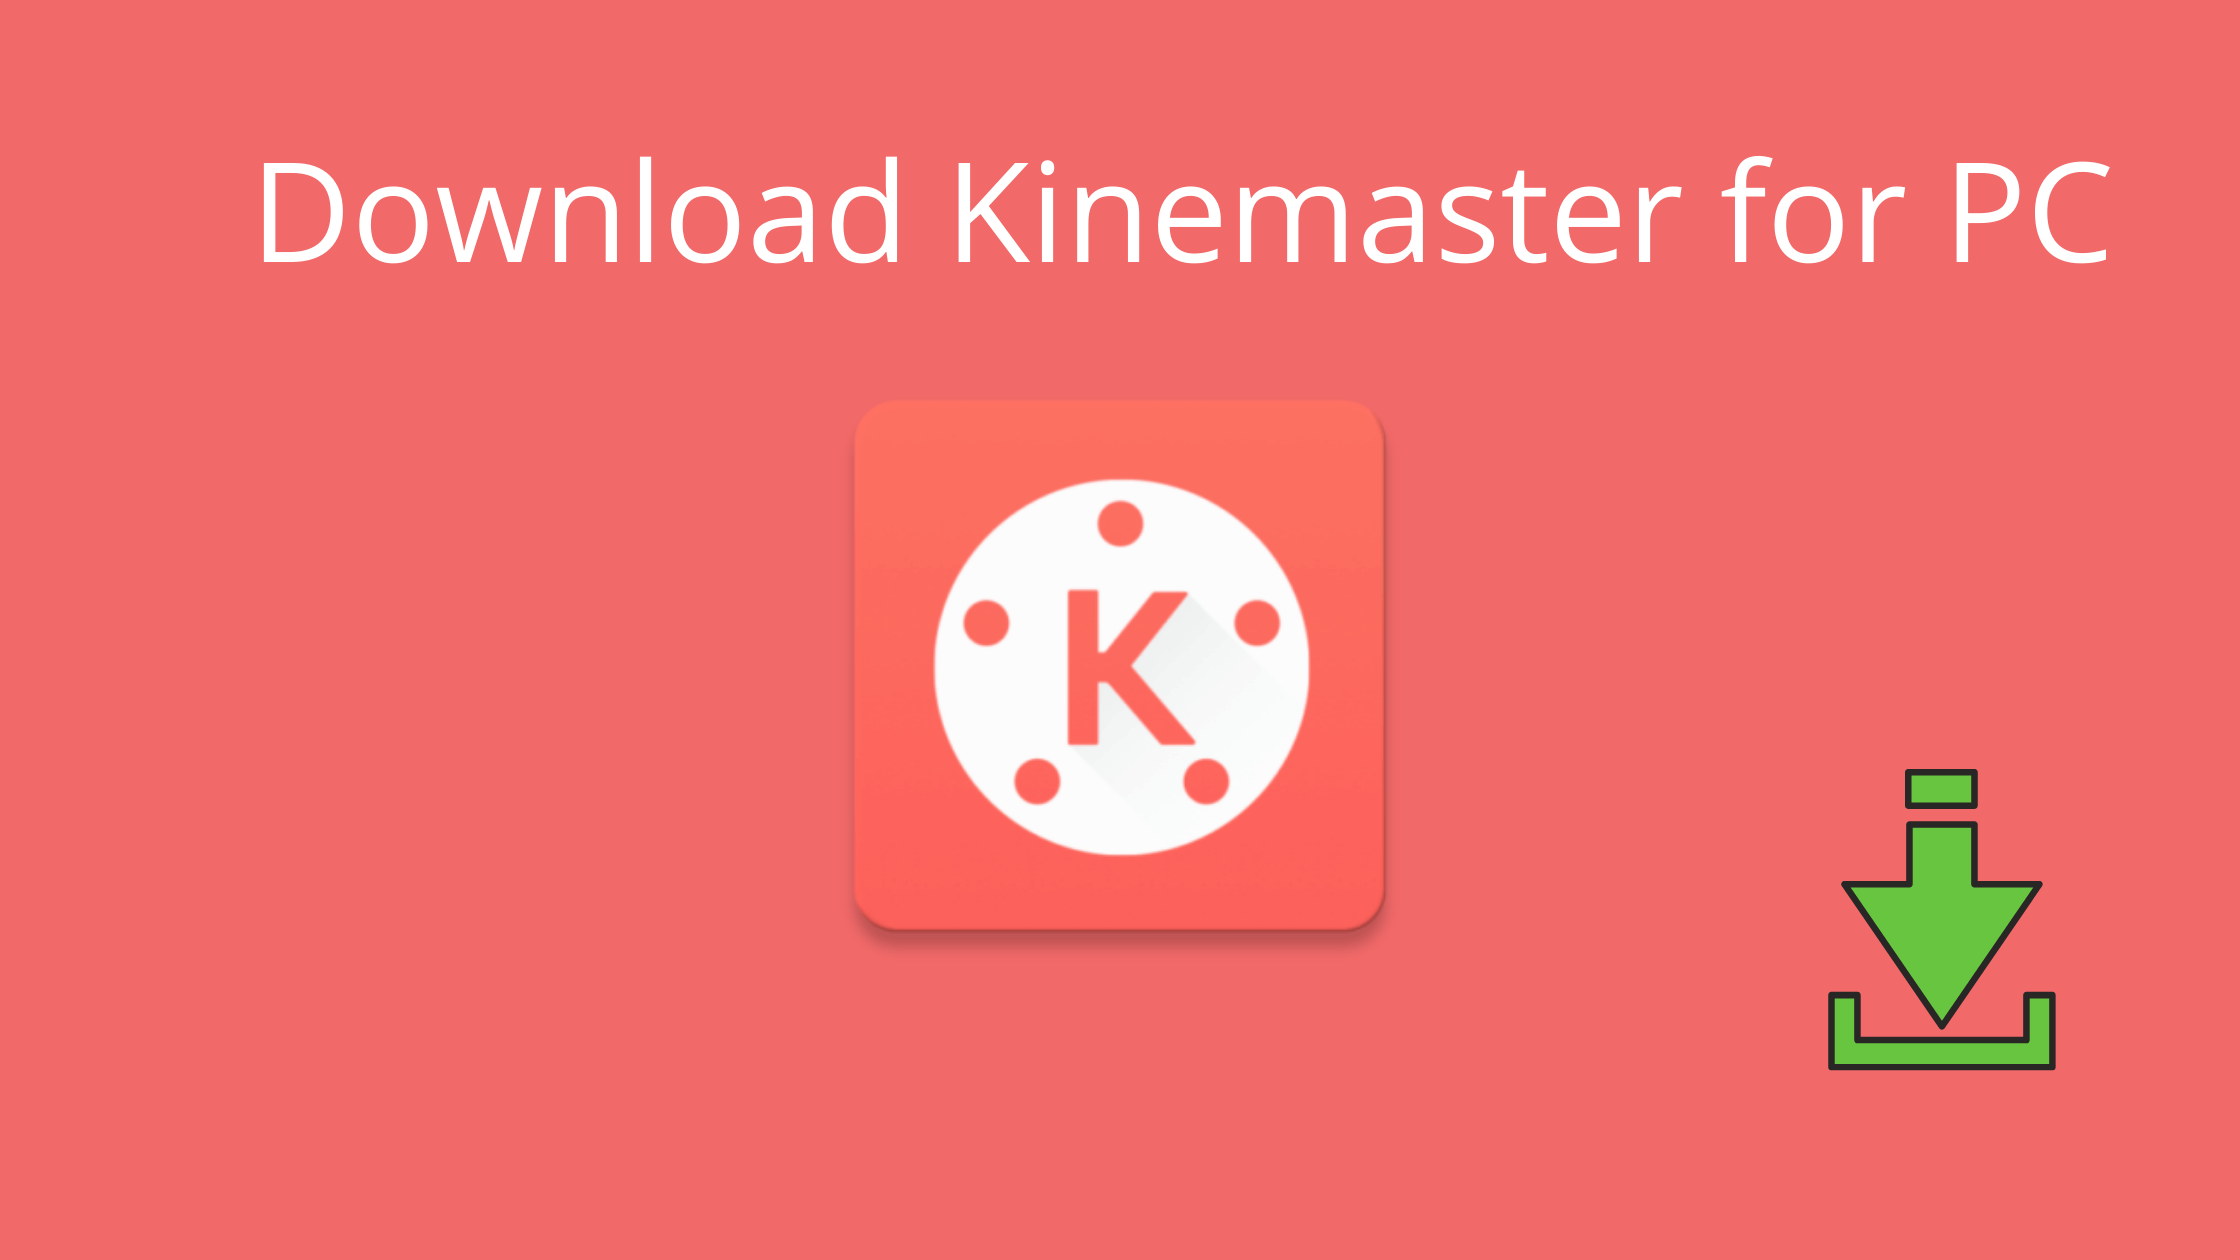 kinemaster for windows 10 free download